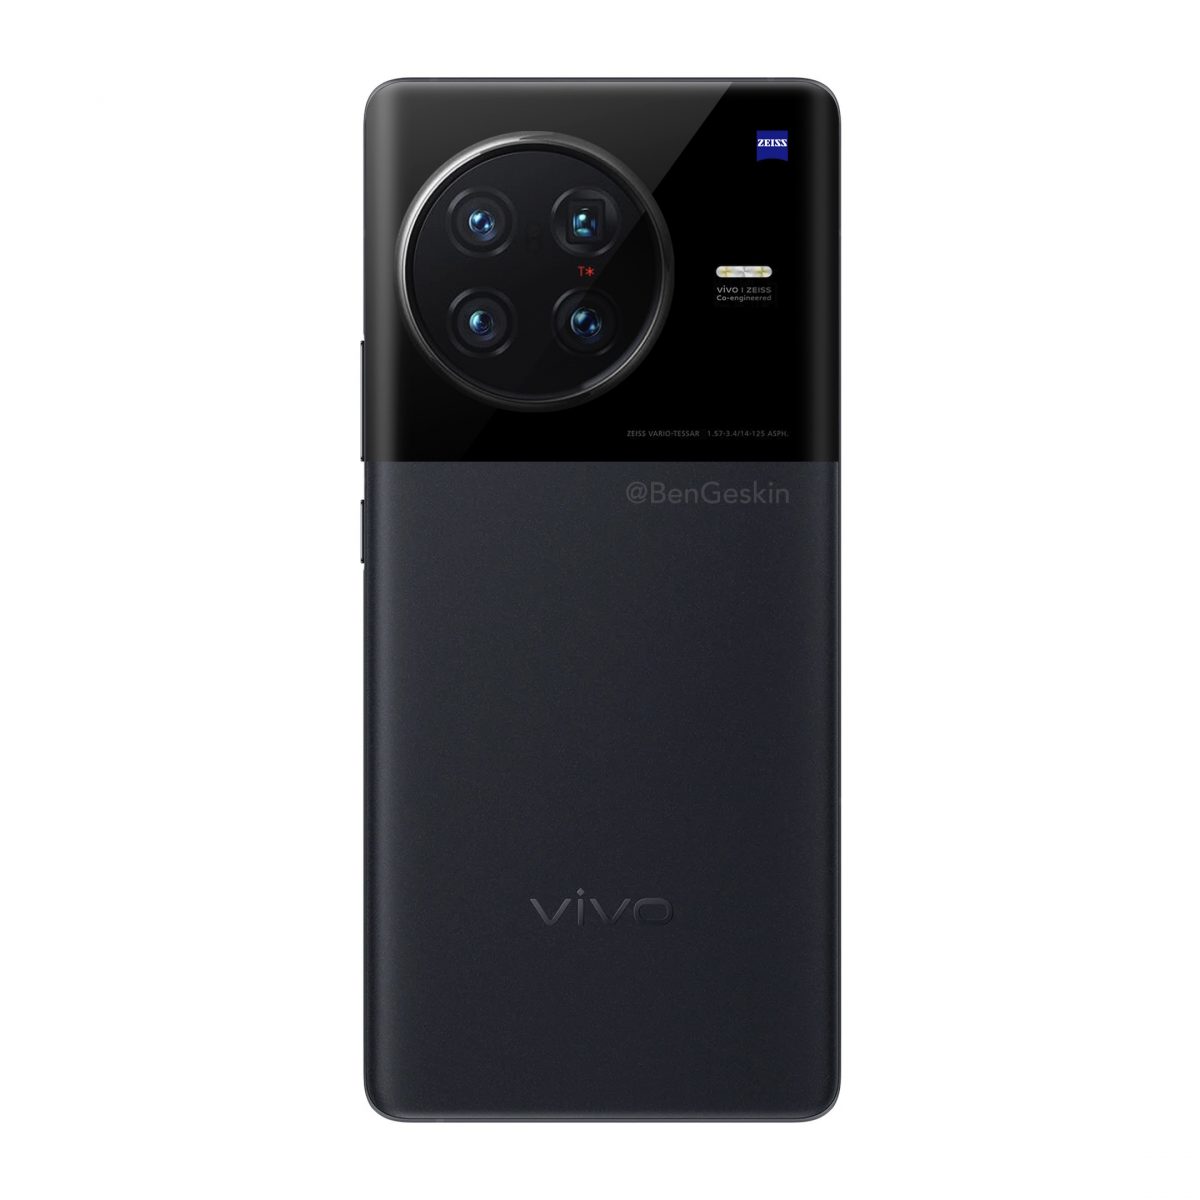 Vivo X90 Pro Plus 5G aparat cena specyfikacja